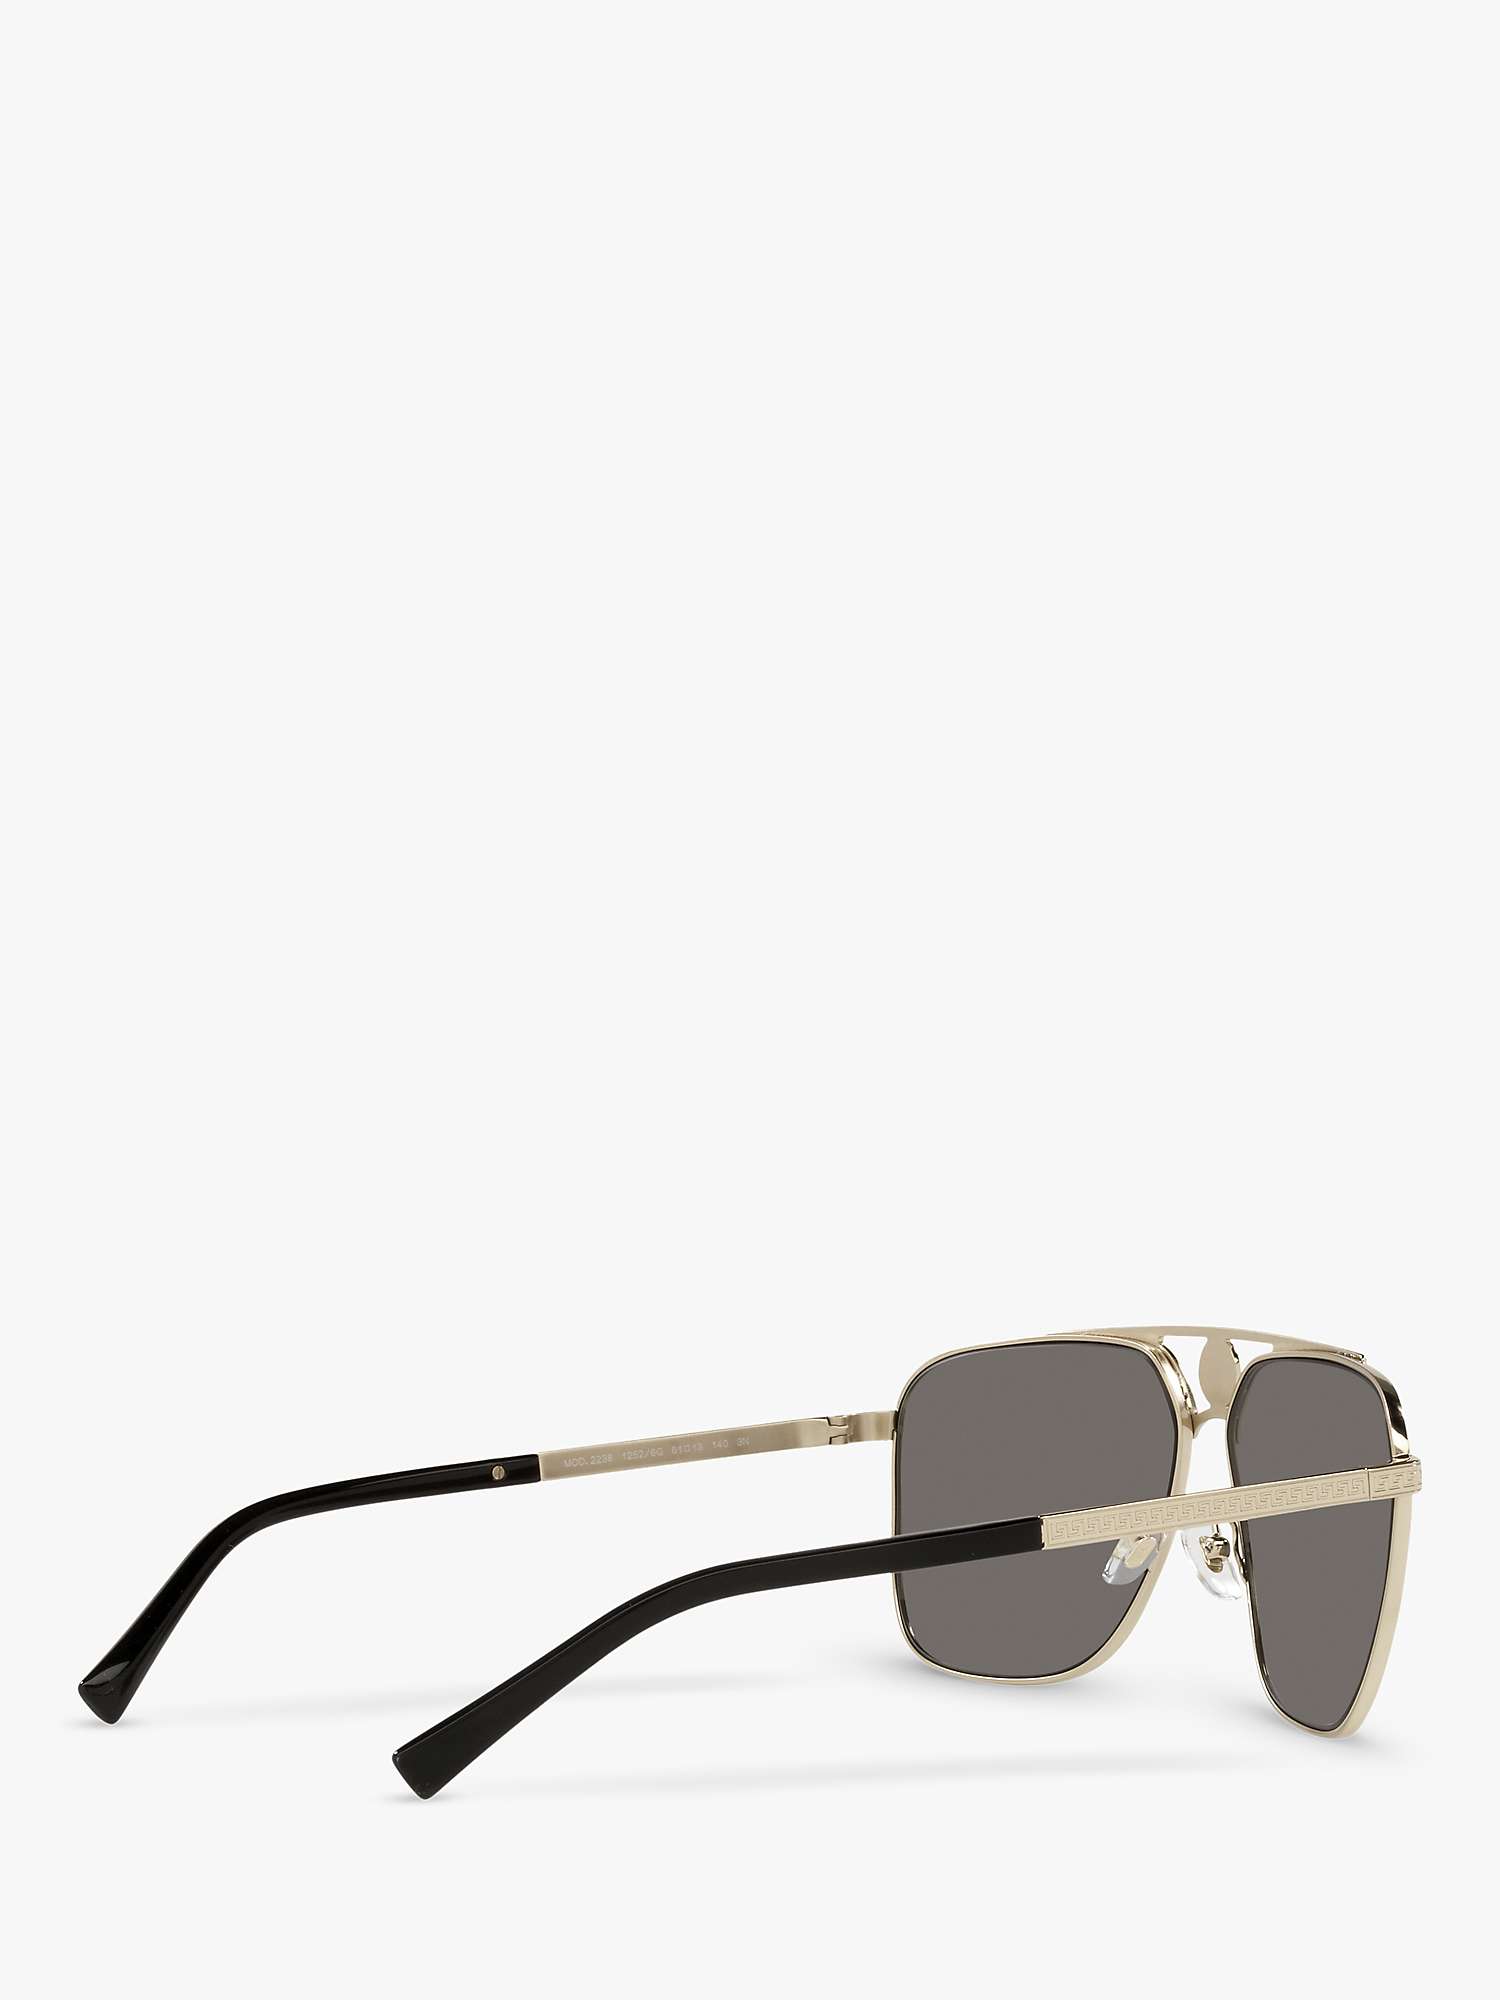 Buy Versace VE2238 Men's Rectangular Sunglasses, Pale Gold/Mirror Grey Online at johnlewis.com